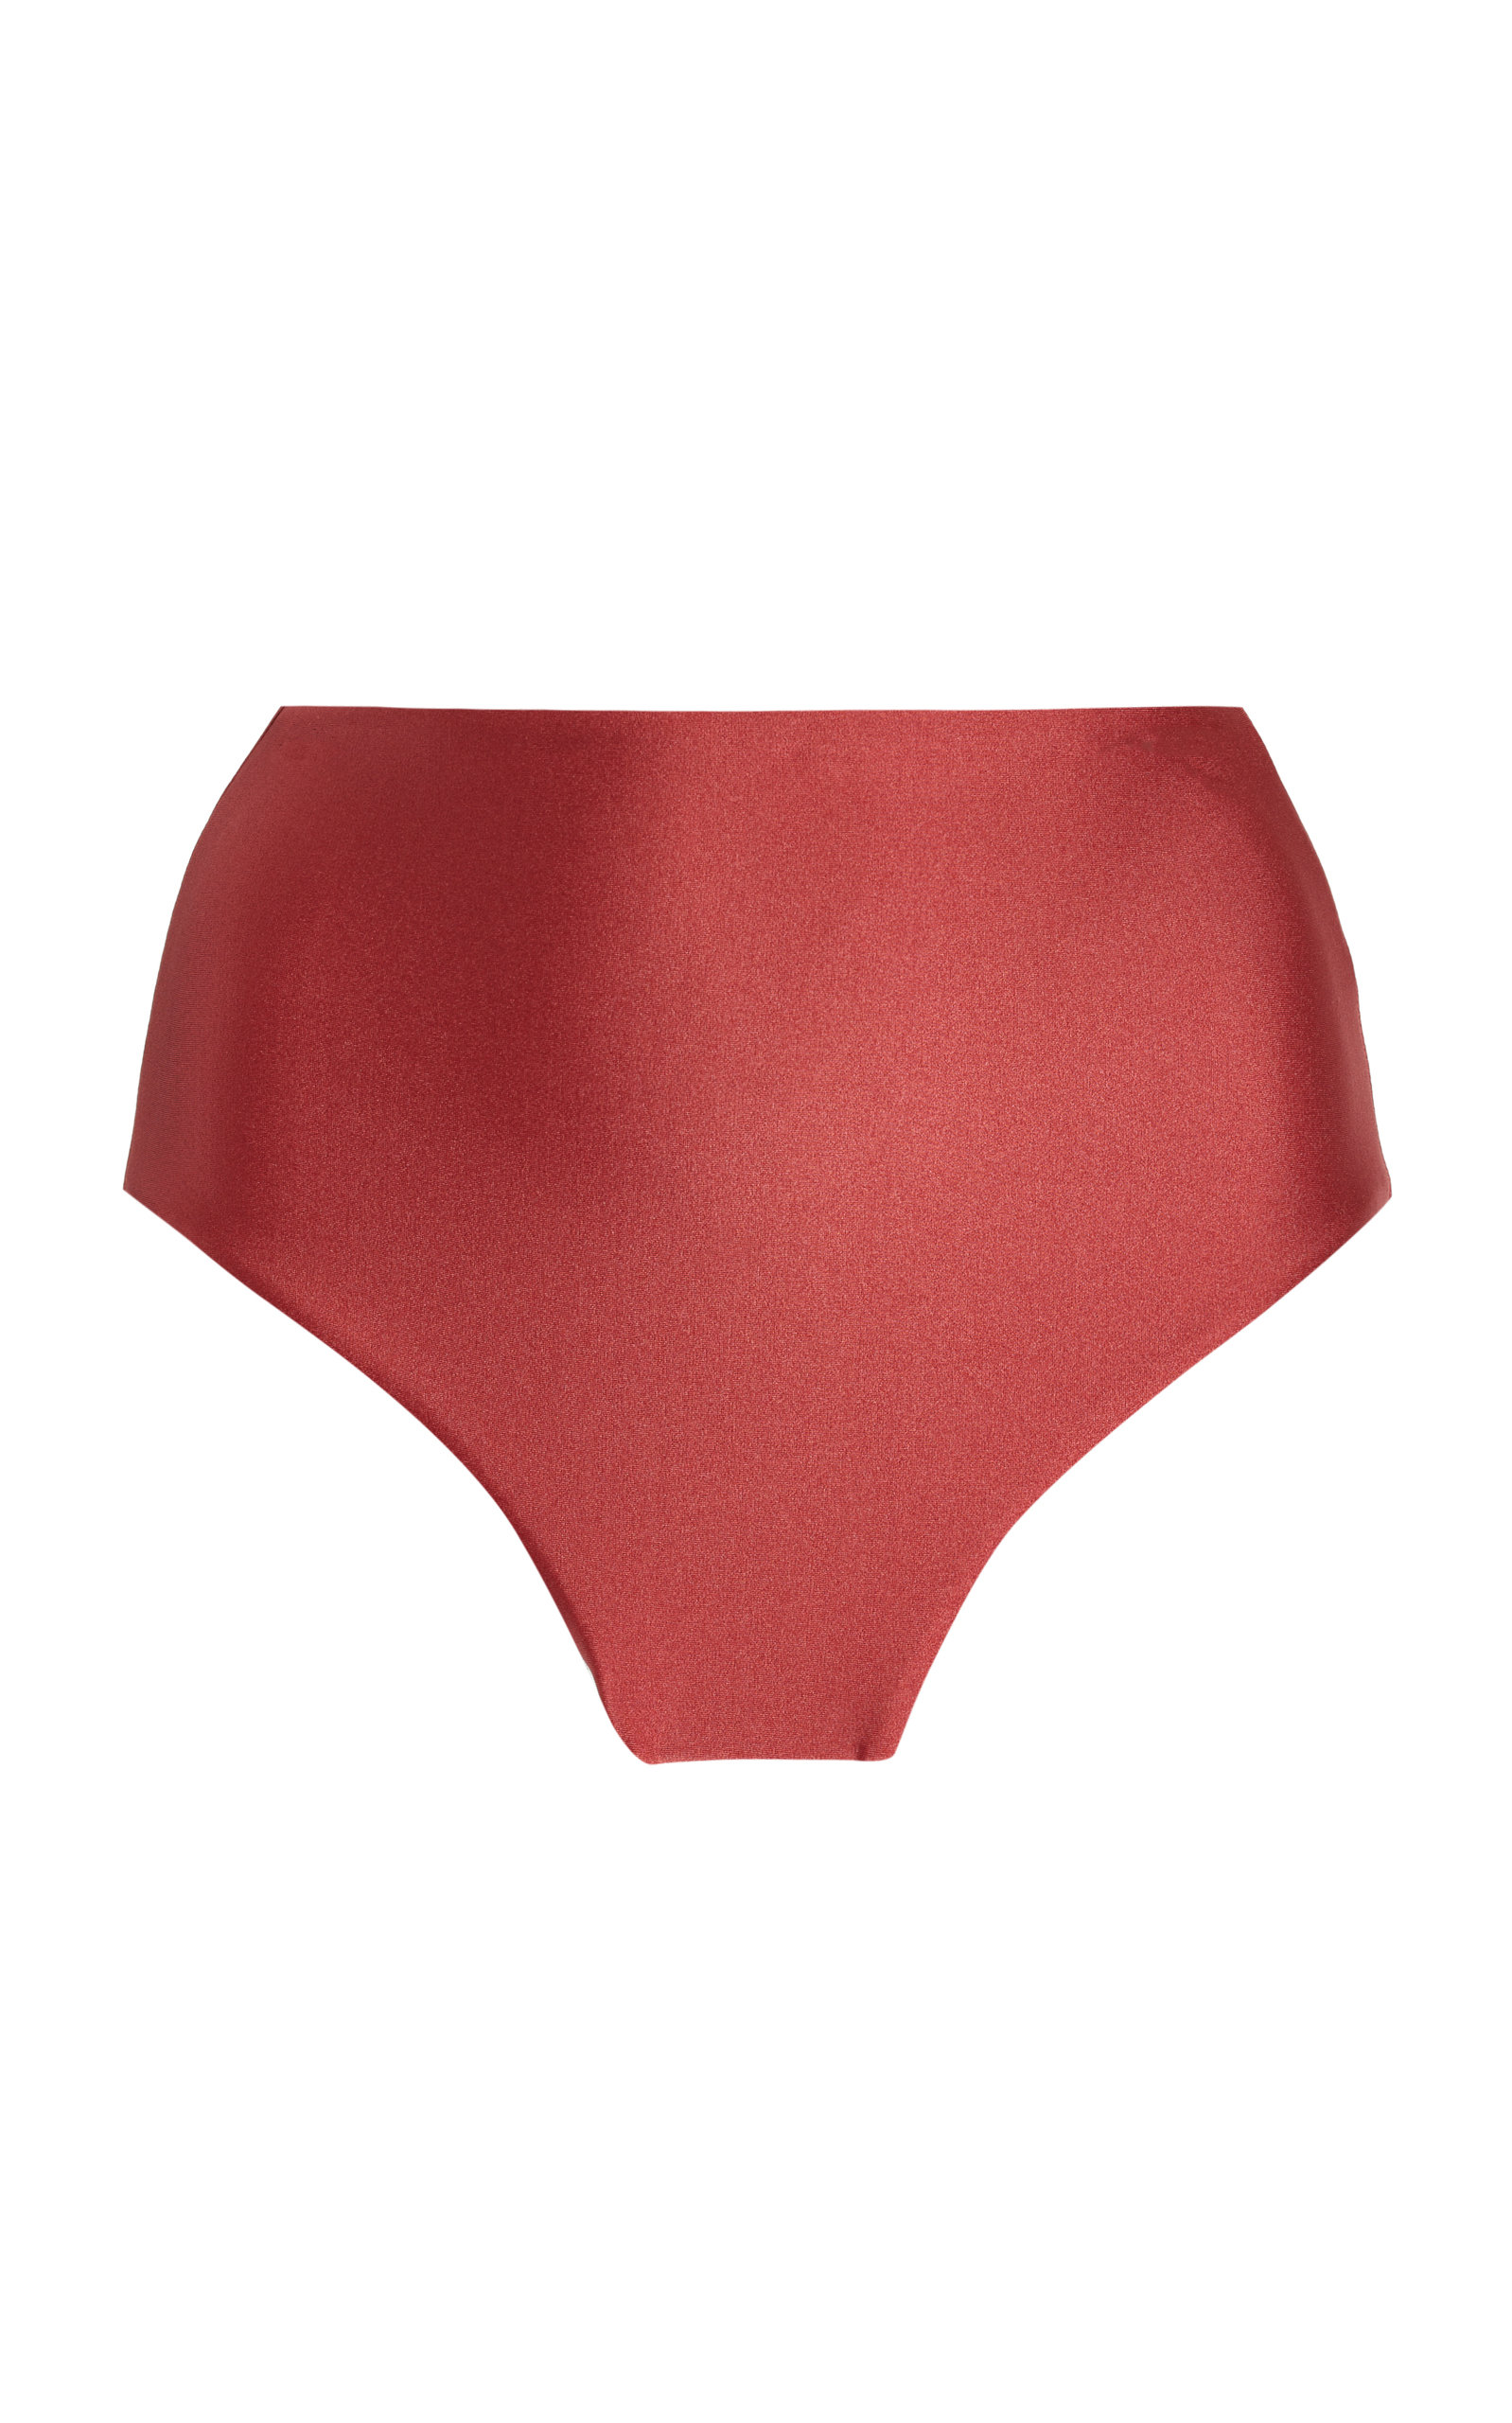 JADE SWIM - Women's Bound Bikini Bottom - Pink - XS - Moda Operandi